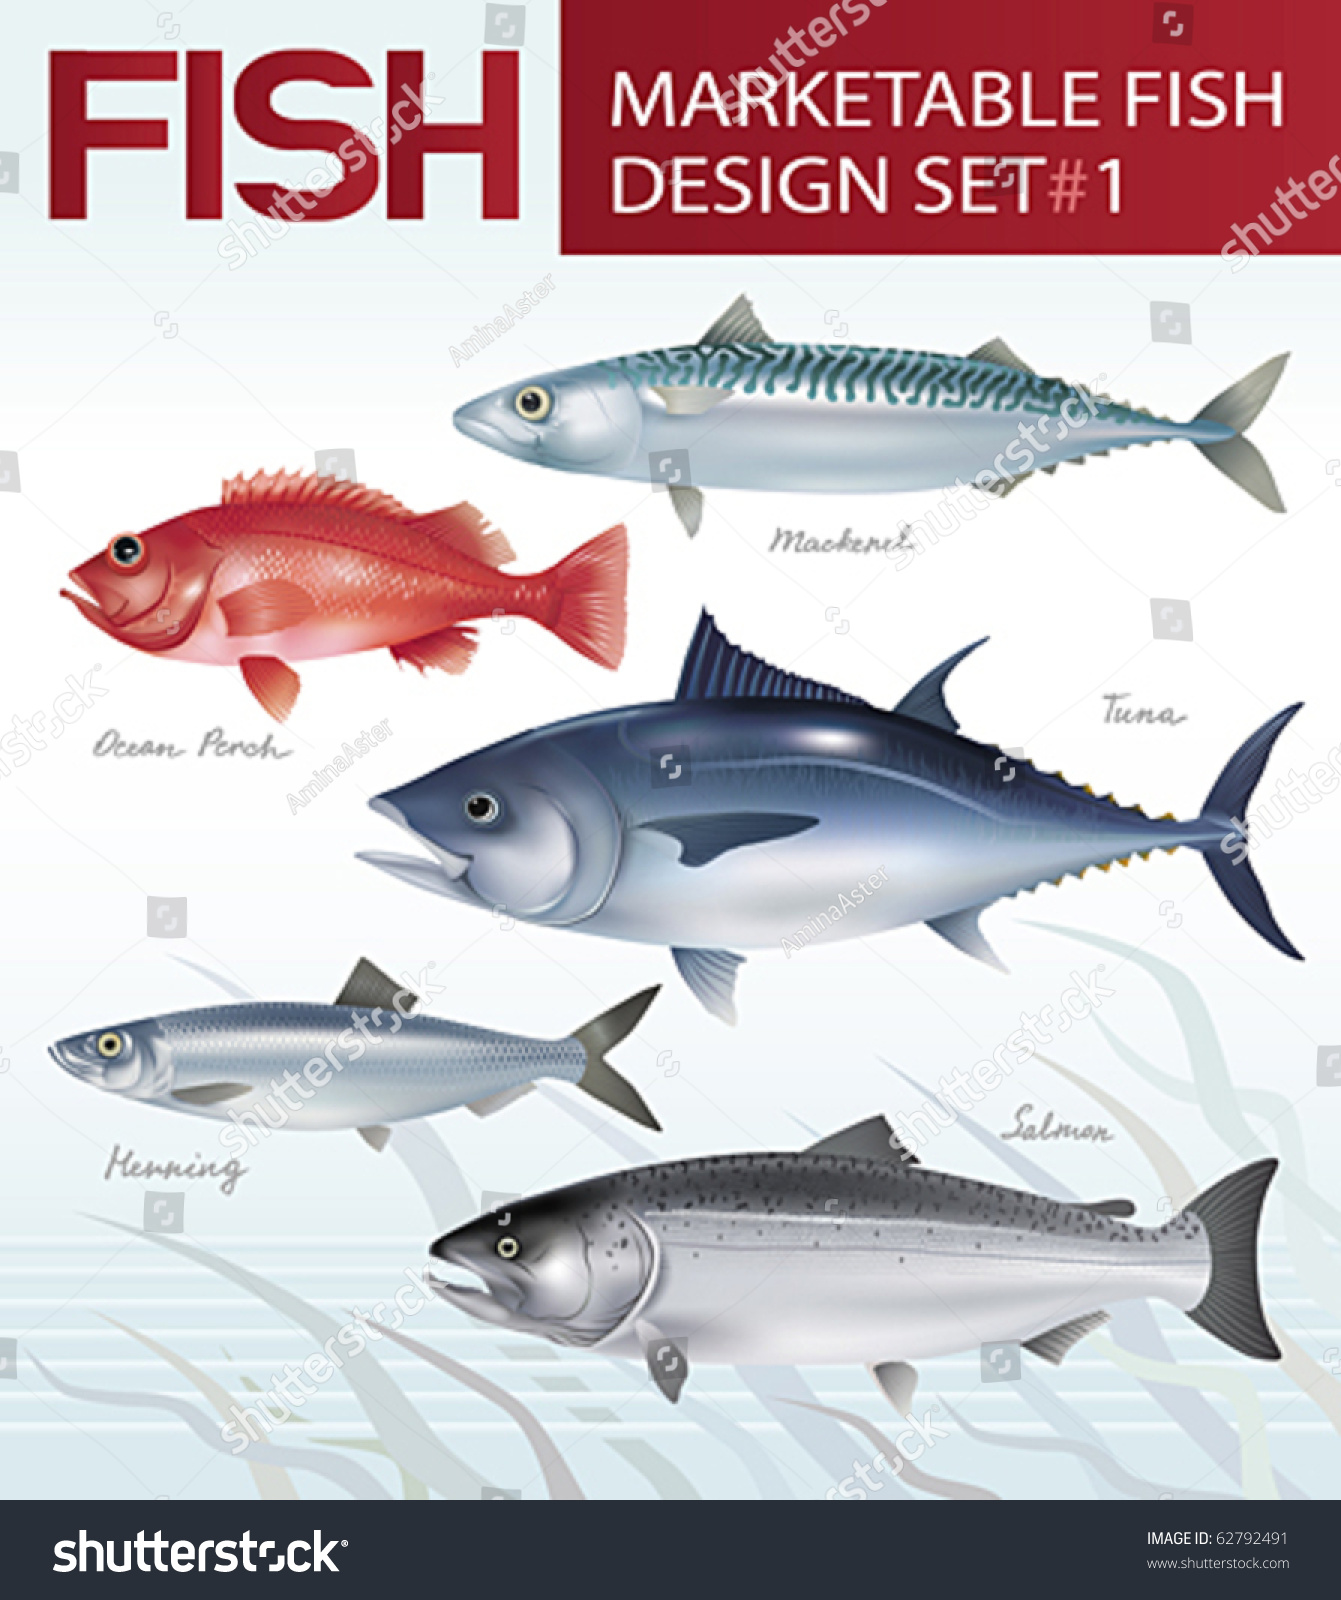 Marketable fish image design set 1. Vector illustration. #62792491